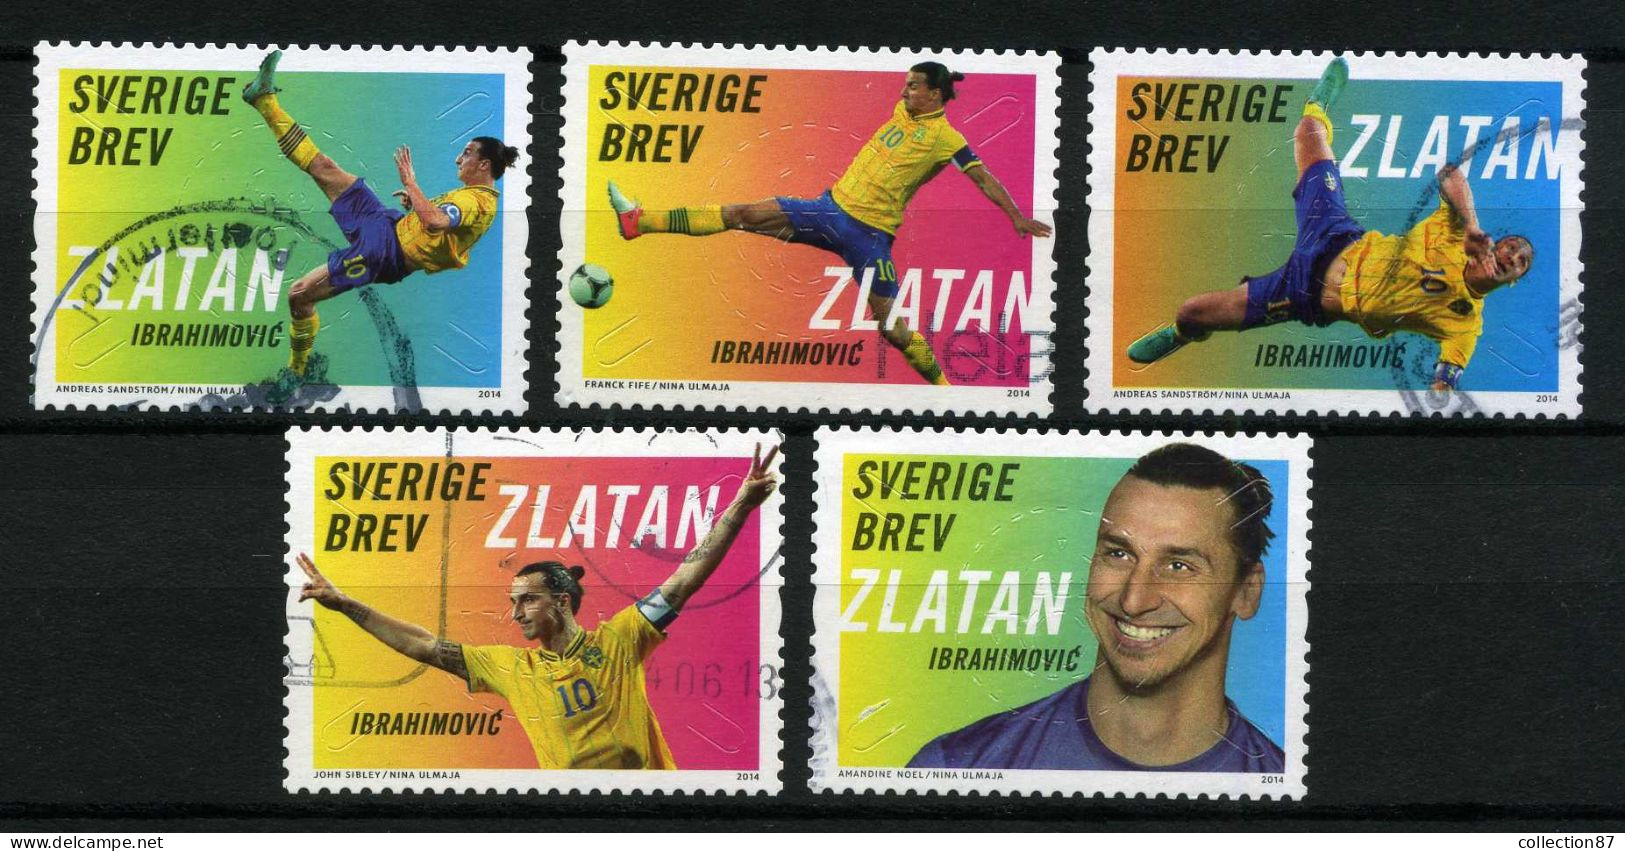 Réf 77 < -- SWEDEN 2014 < Yvert N° 2961 à 2965 Ø Used -- > Football Zlatan Ibrahinovic Foot Footballeur - Soccer - Gebruikt